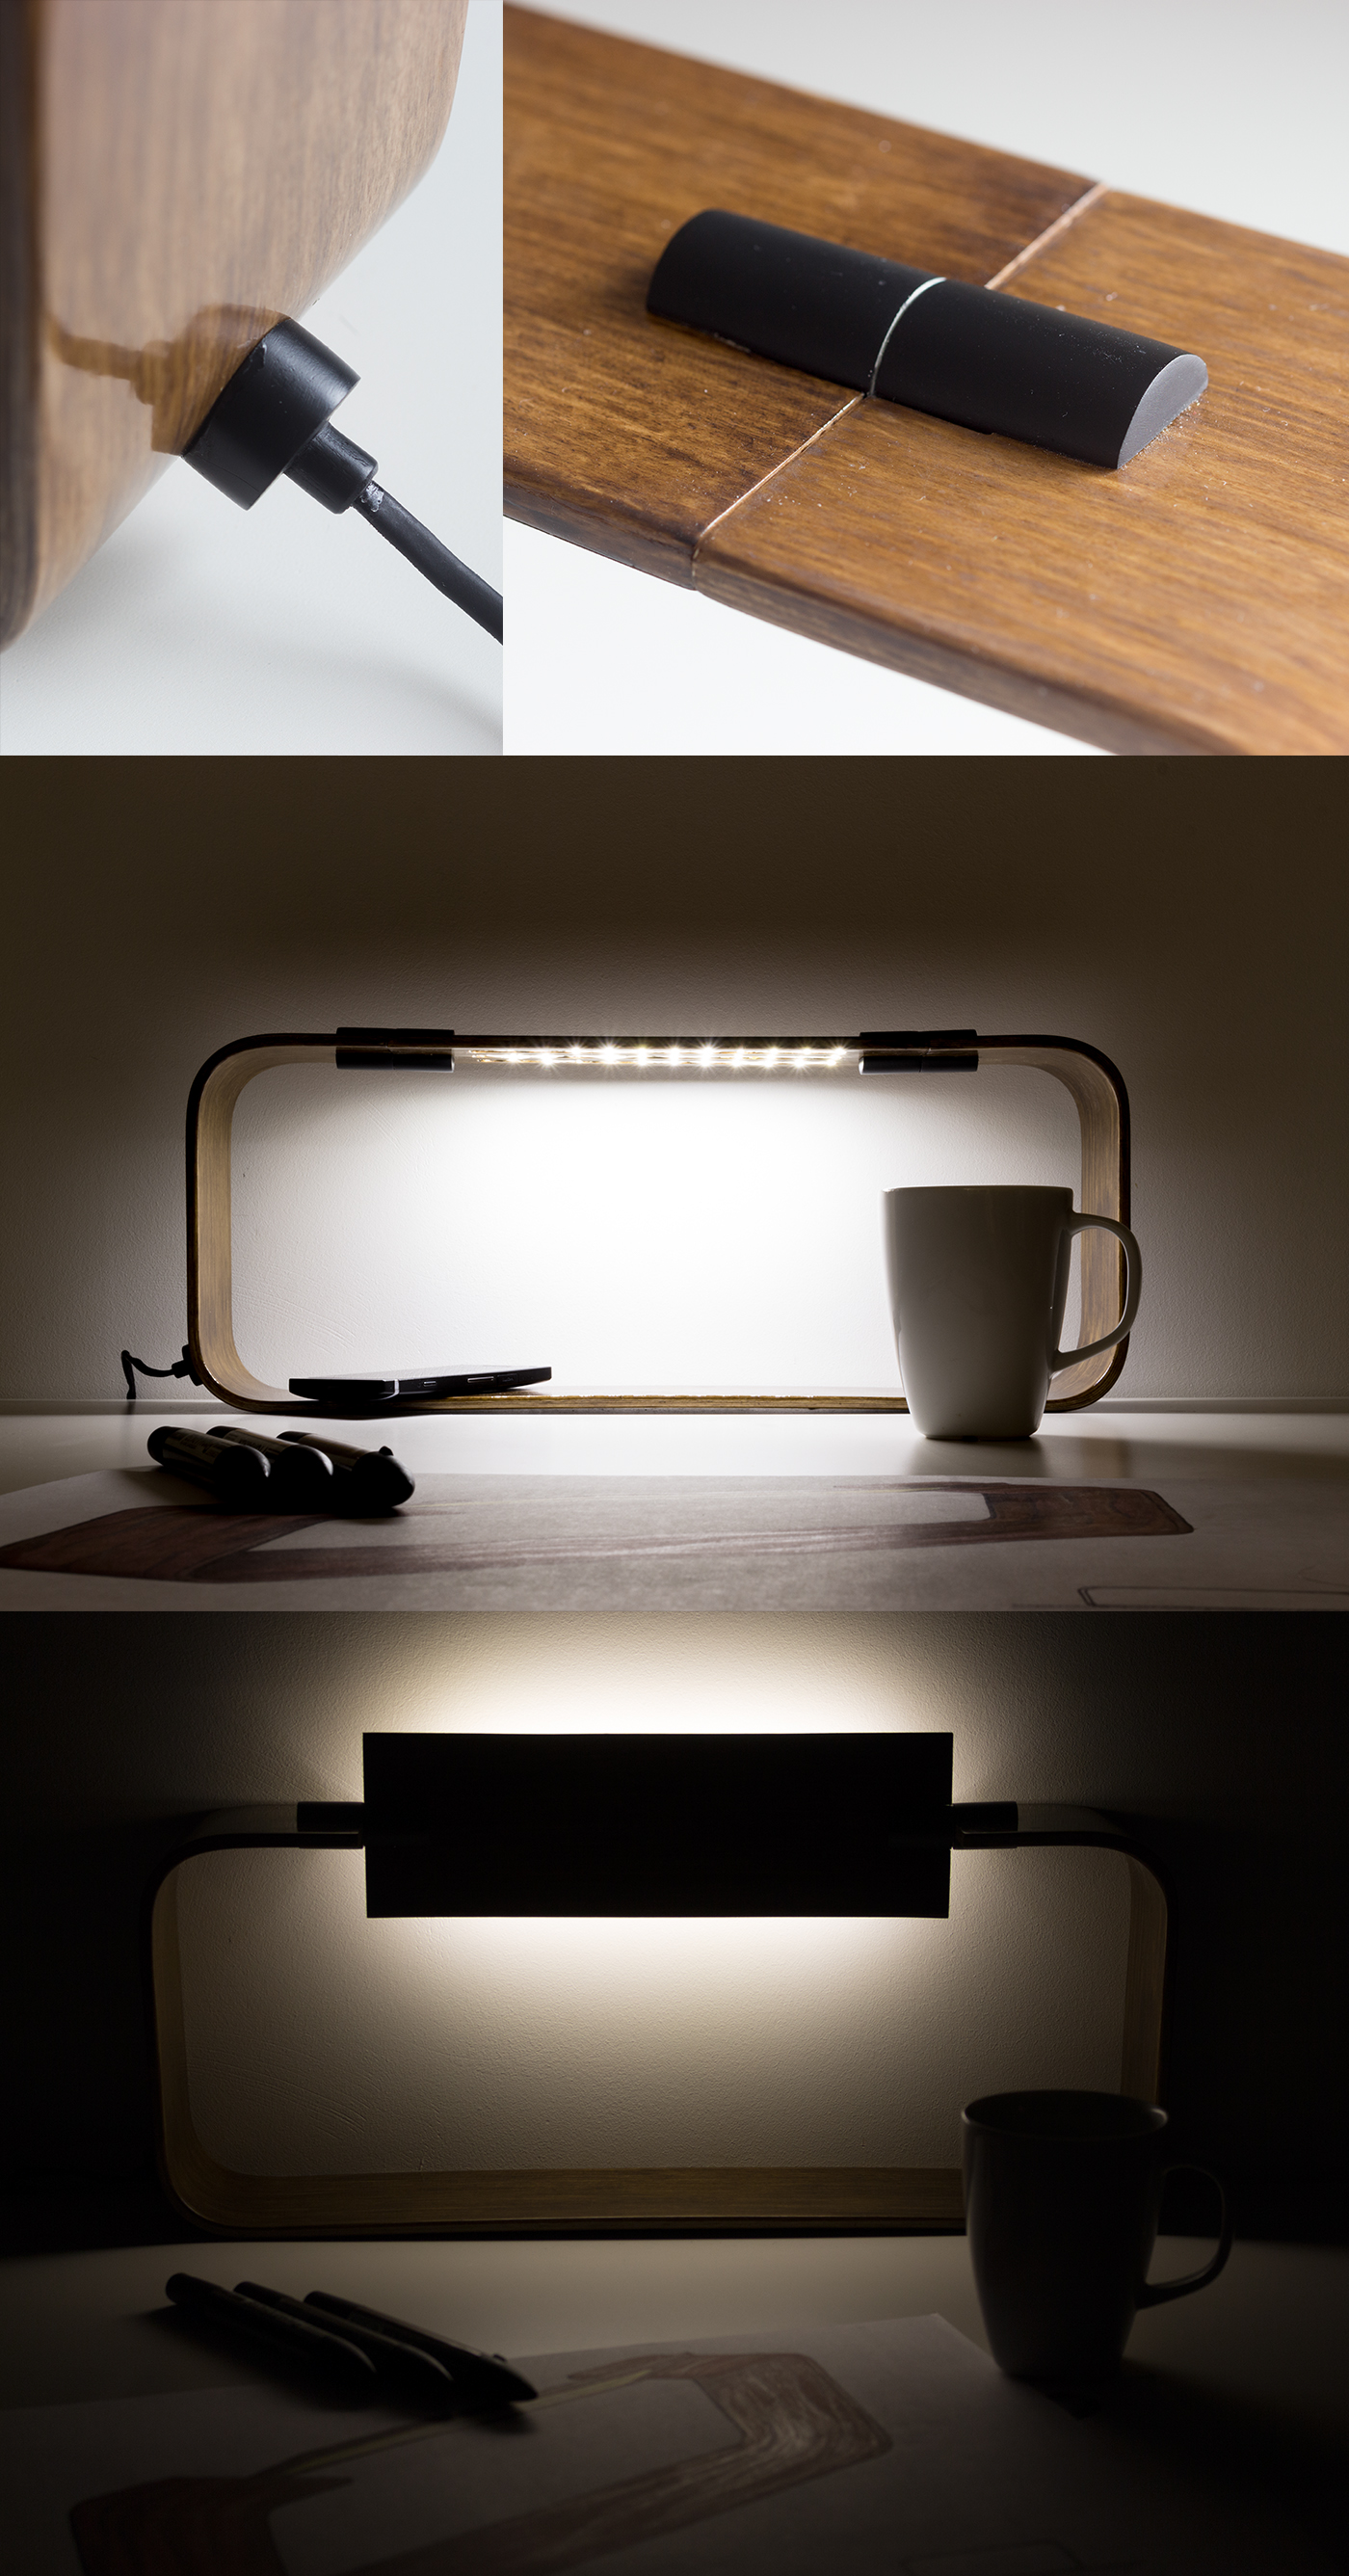 bent Laminating Lamination desk Lamp curved wood birch veneer mould light led warm White comforting